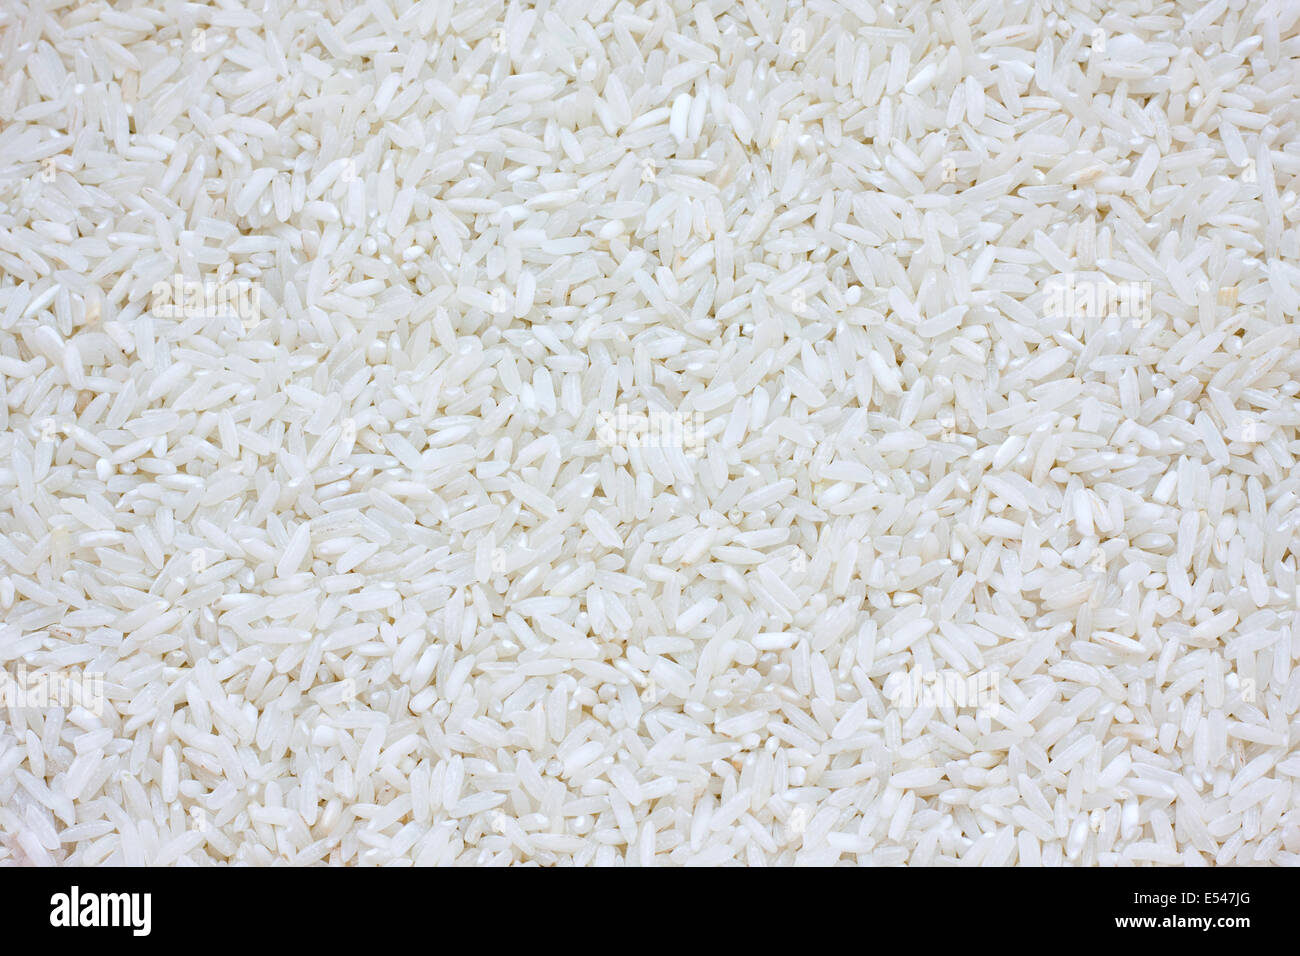 Uncooked white rice texture Stock Photo - Alamy